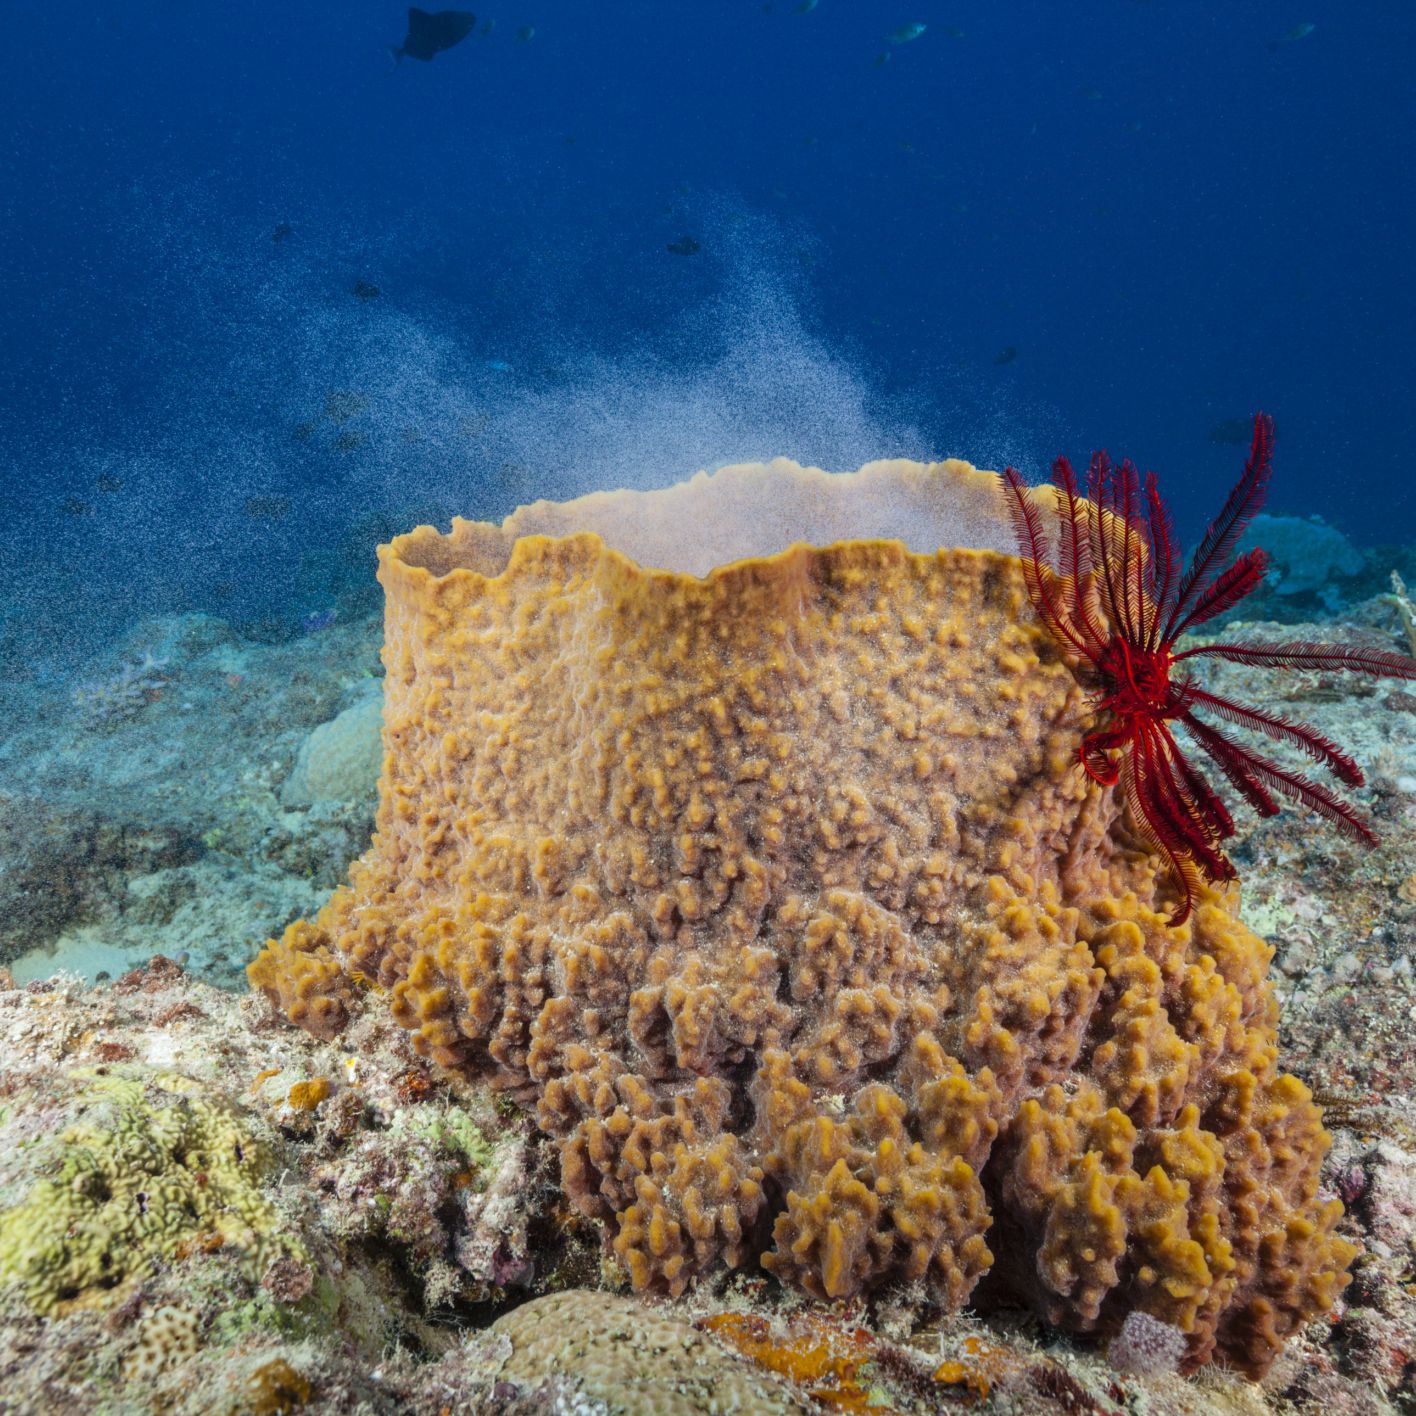 What do sea sponges look like?